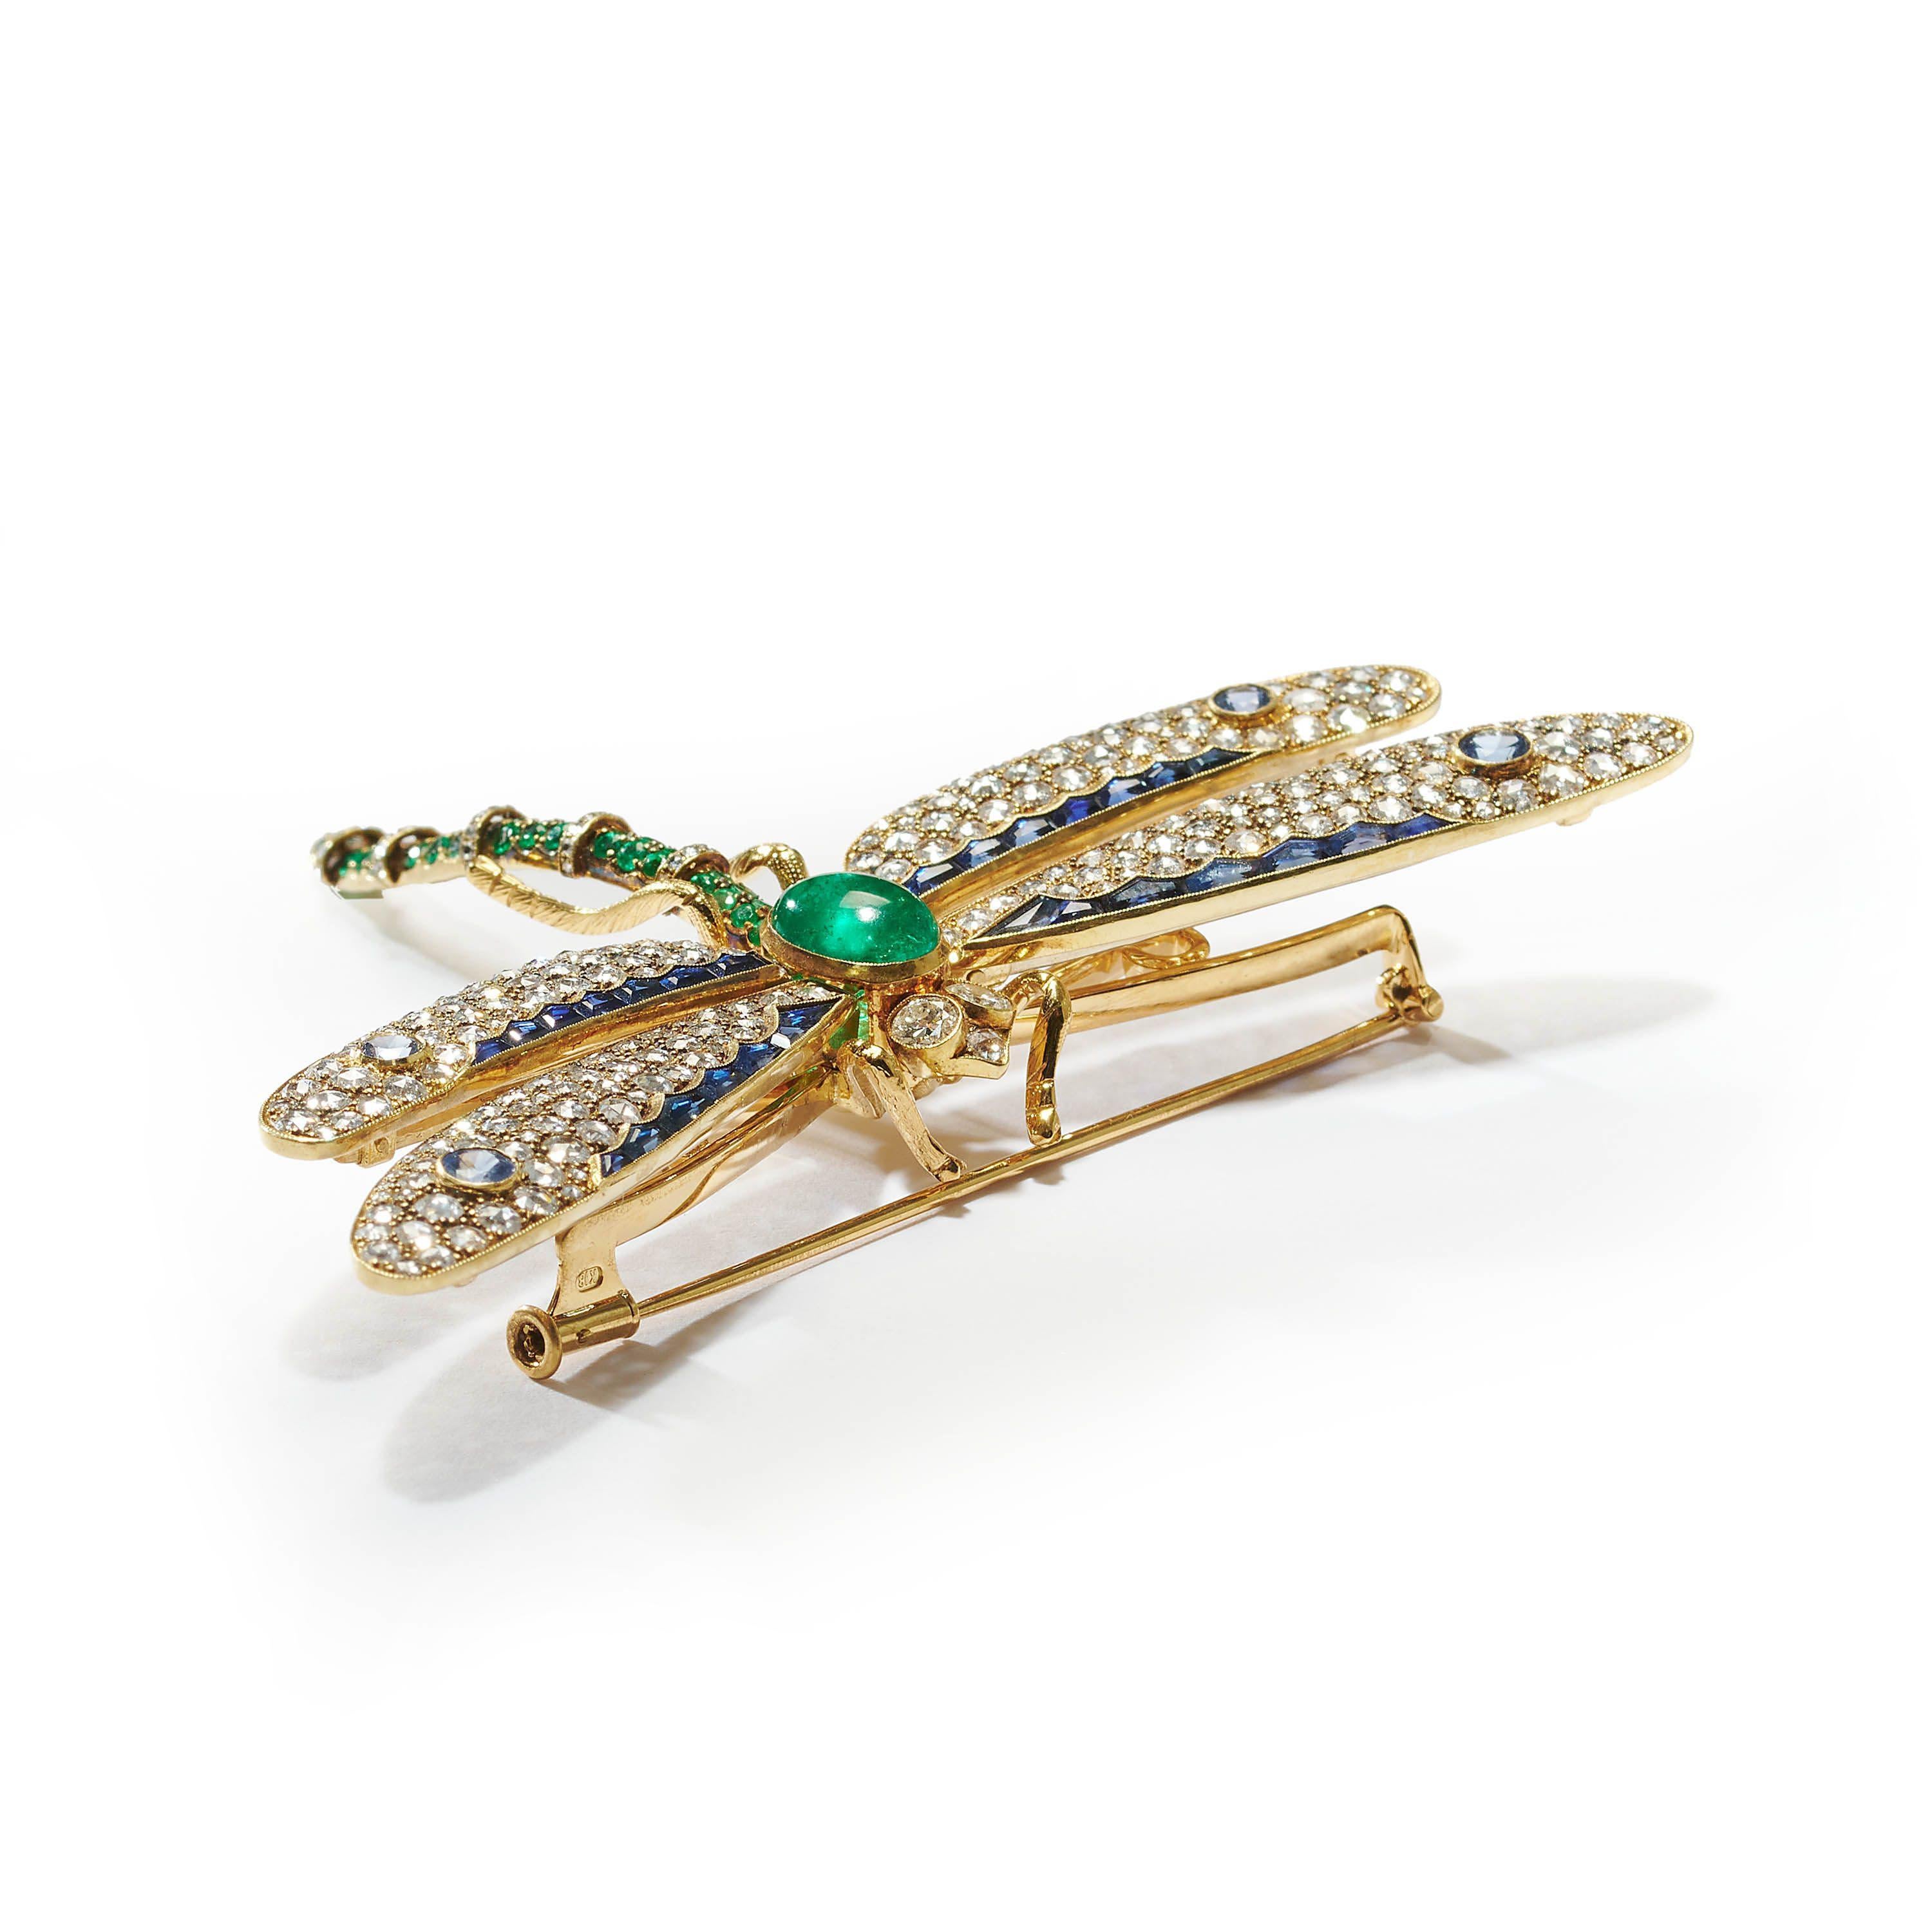 Brilliant Cut Modern Emerald, Diamond, Sapphire, and Gold Dragonfly Brooch